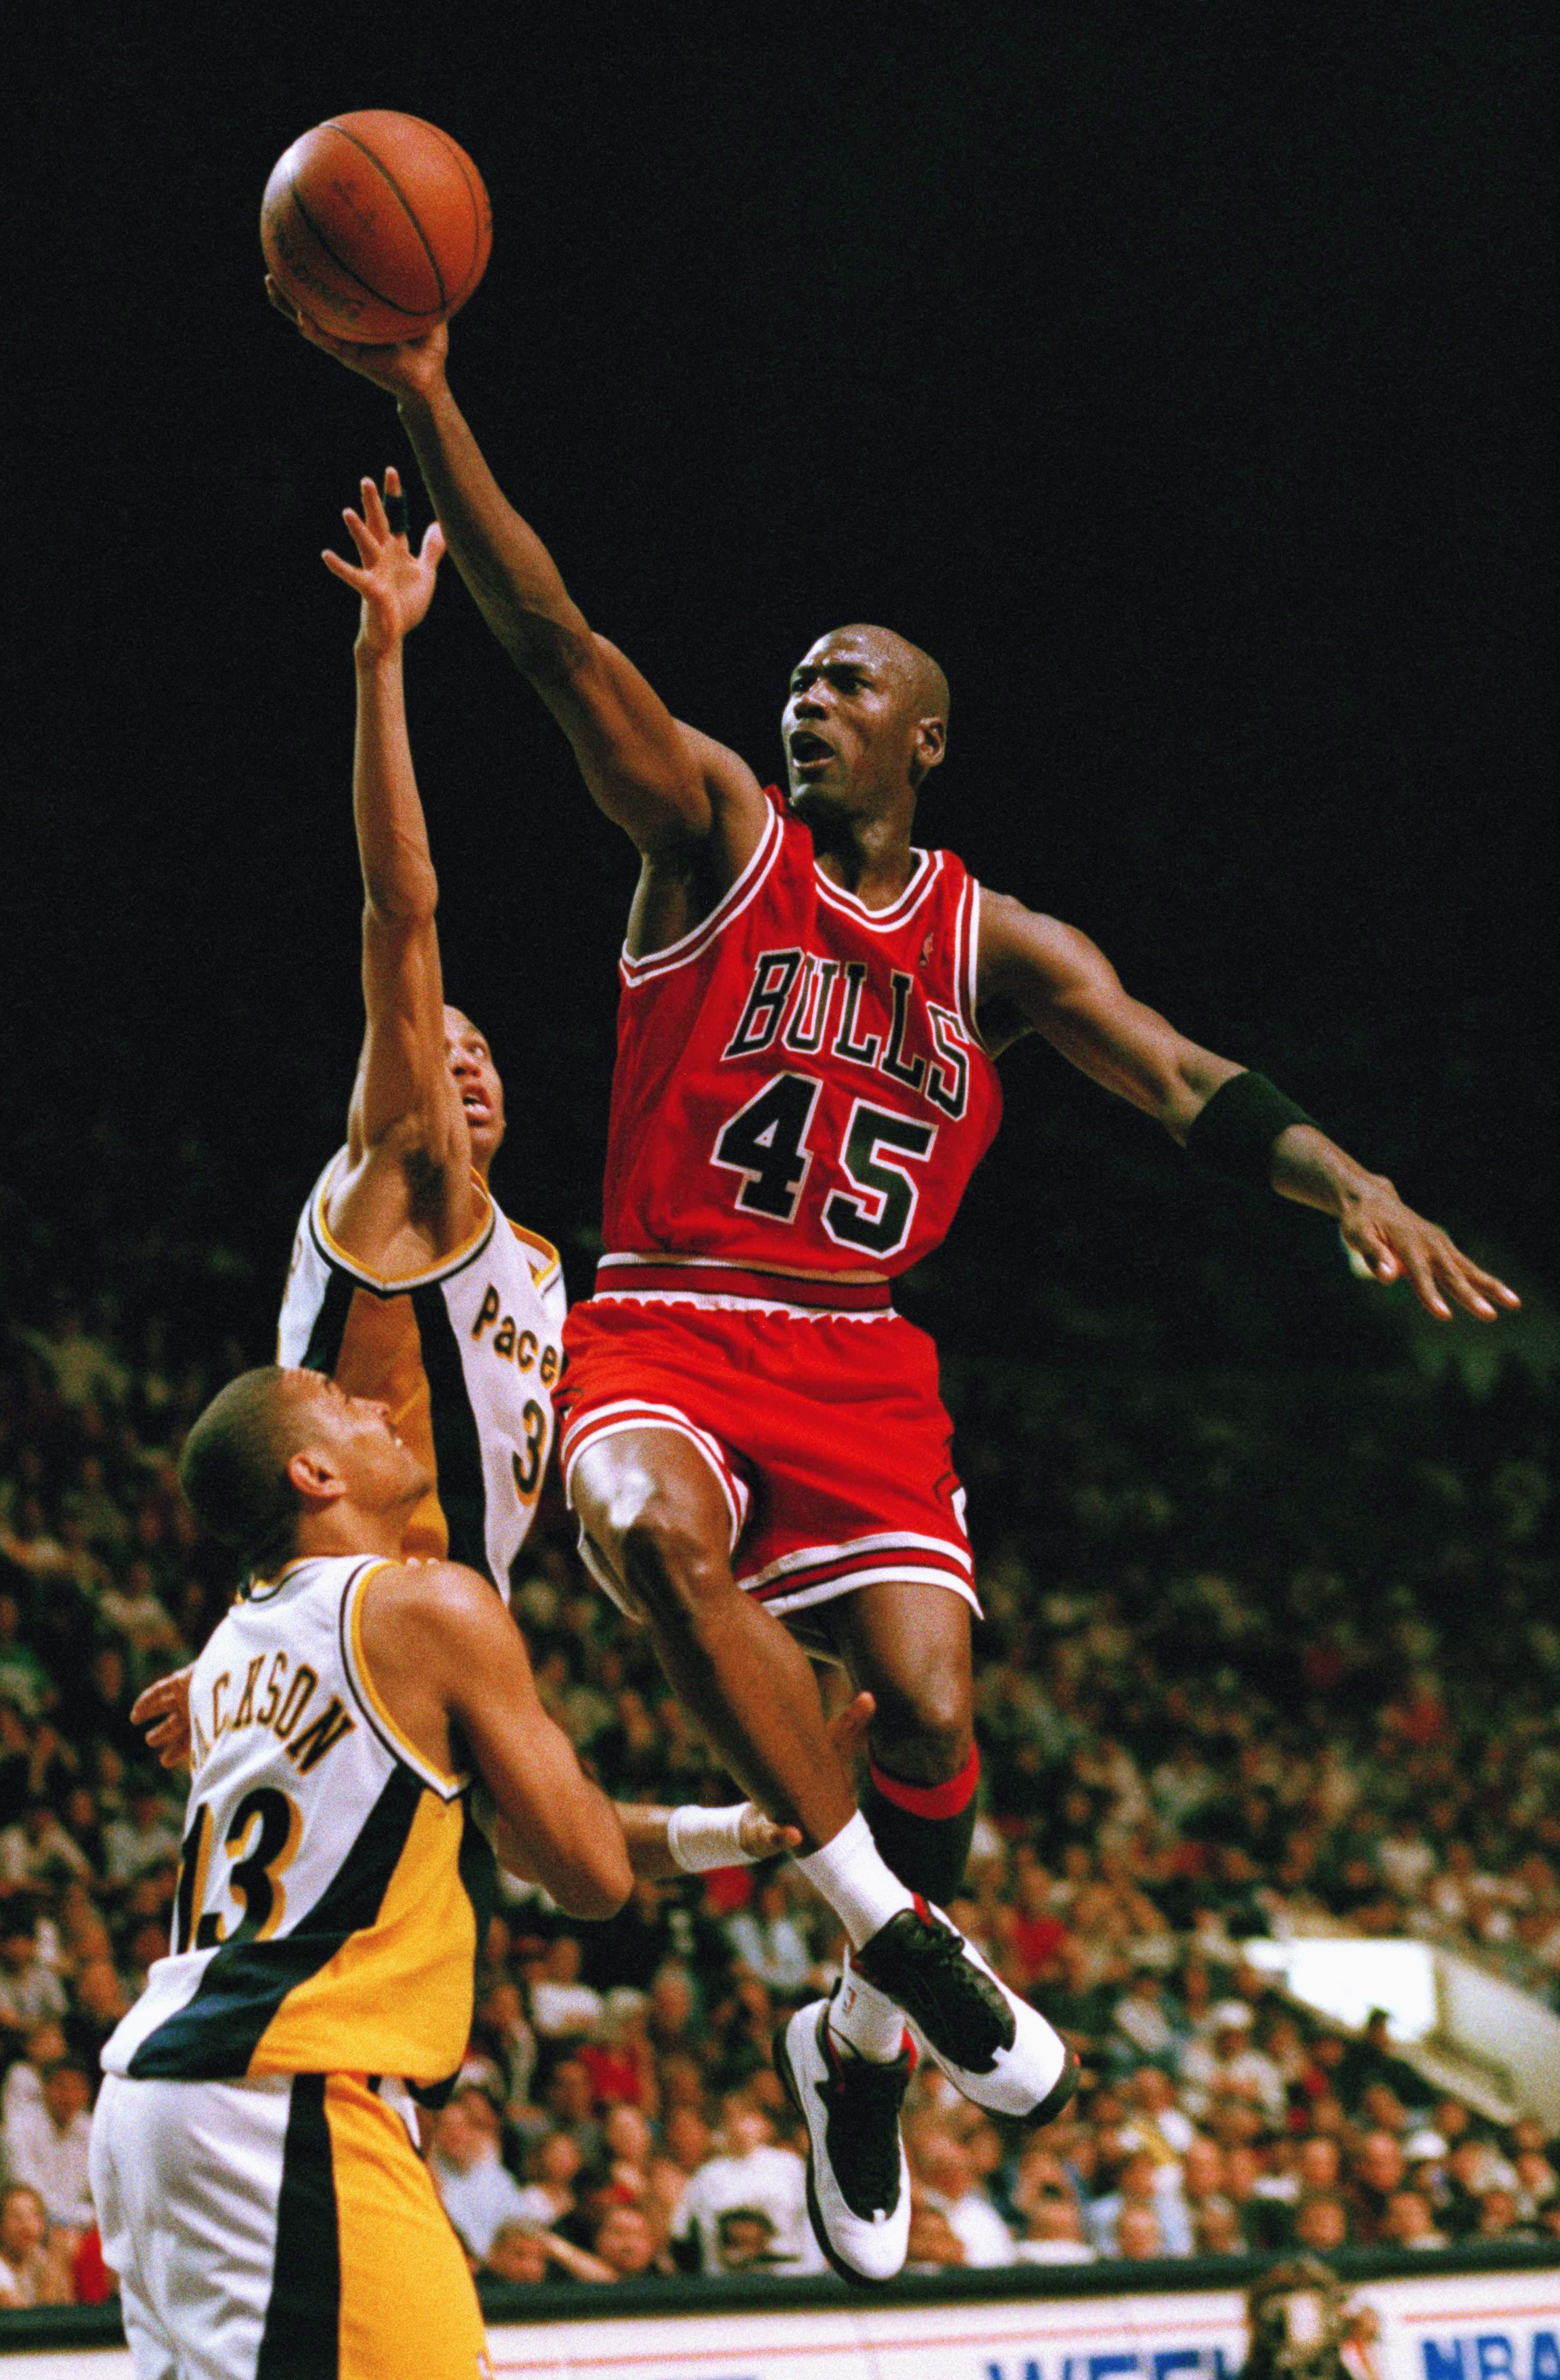 Jordan 23 Basketball Player - HD Wallpaper 